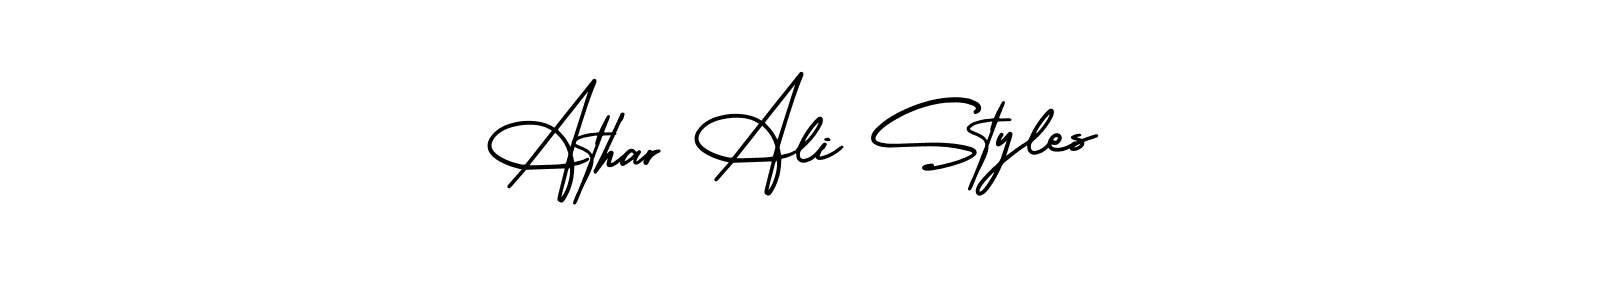 100+ Athar Ali Styles Name Signature Style Ideas | New eSignature